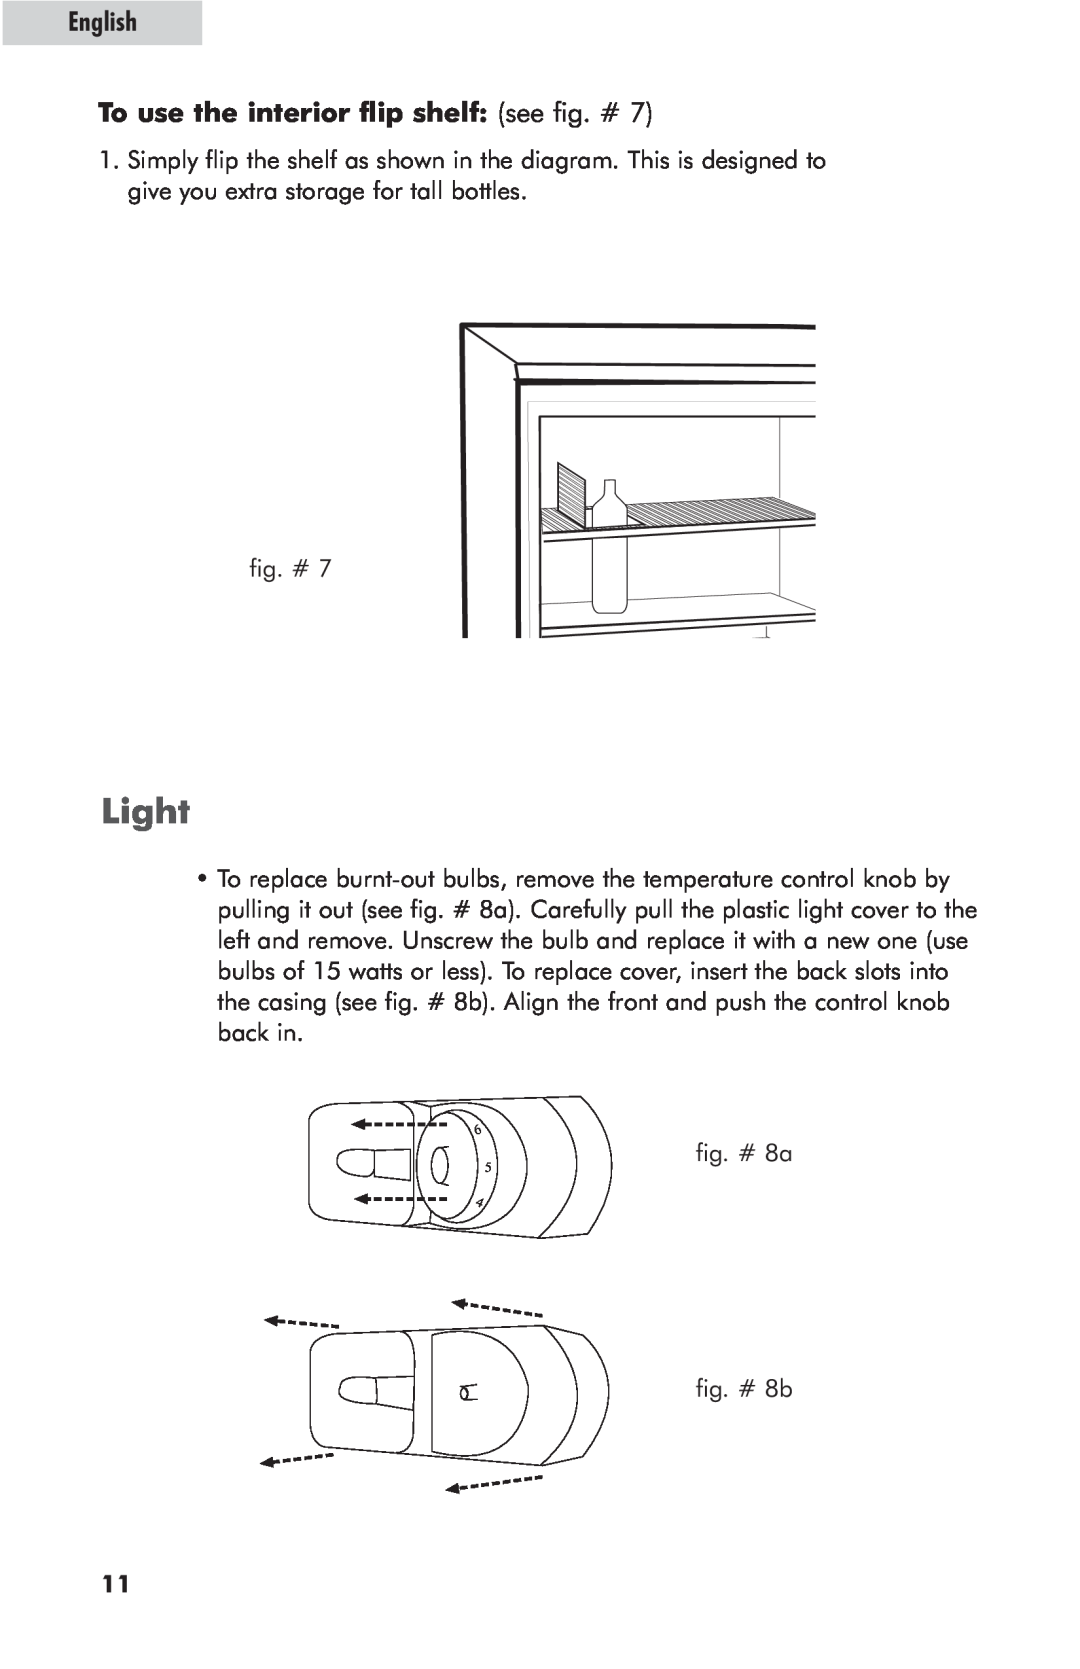 Haier hc125fvs user manual Light, To use the interior flip shelf see fig. #, English 